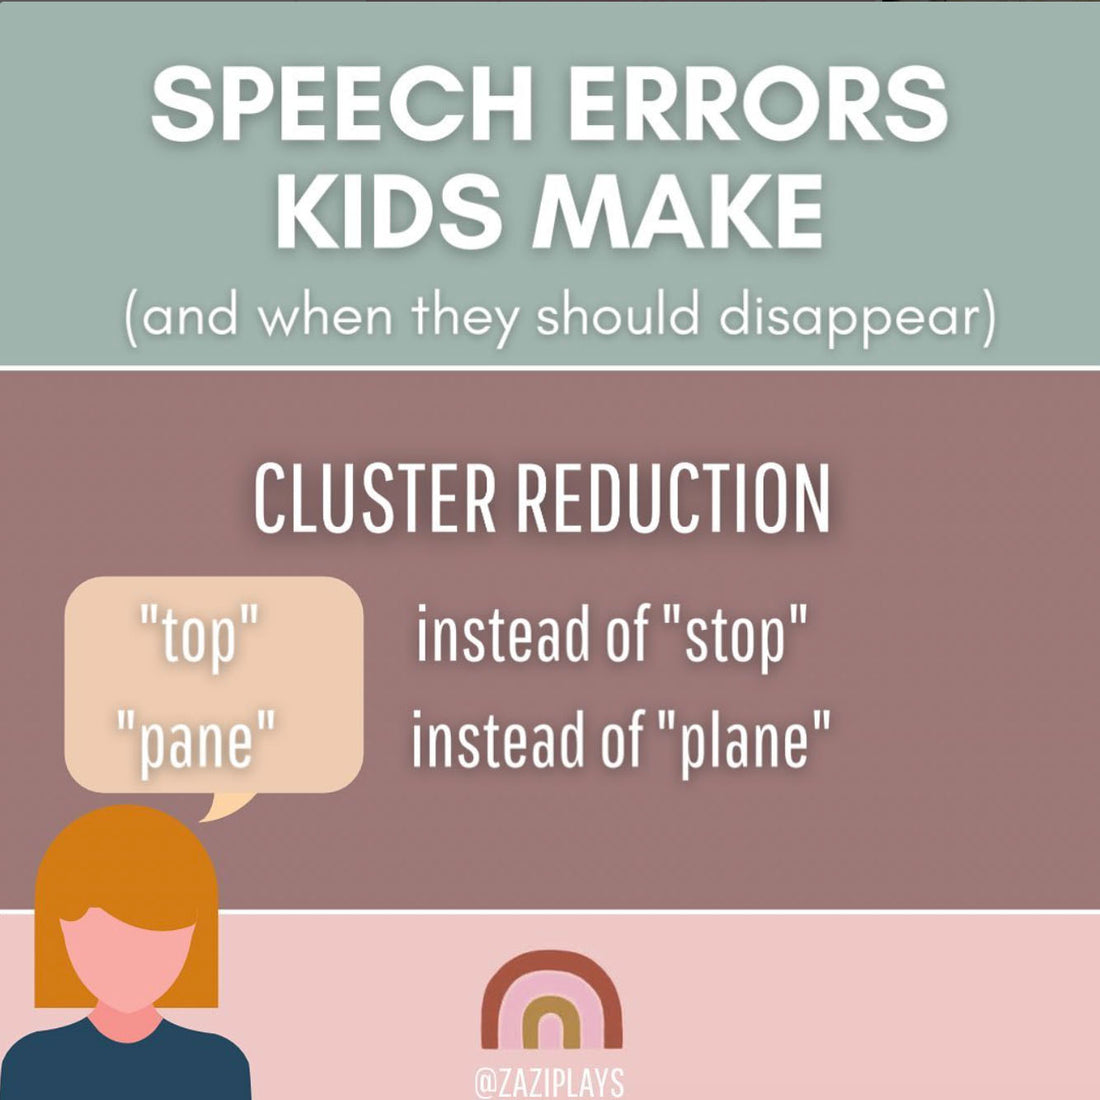 Speech errors kids make: Cluster reduction